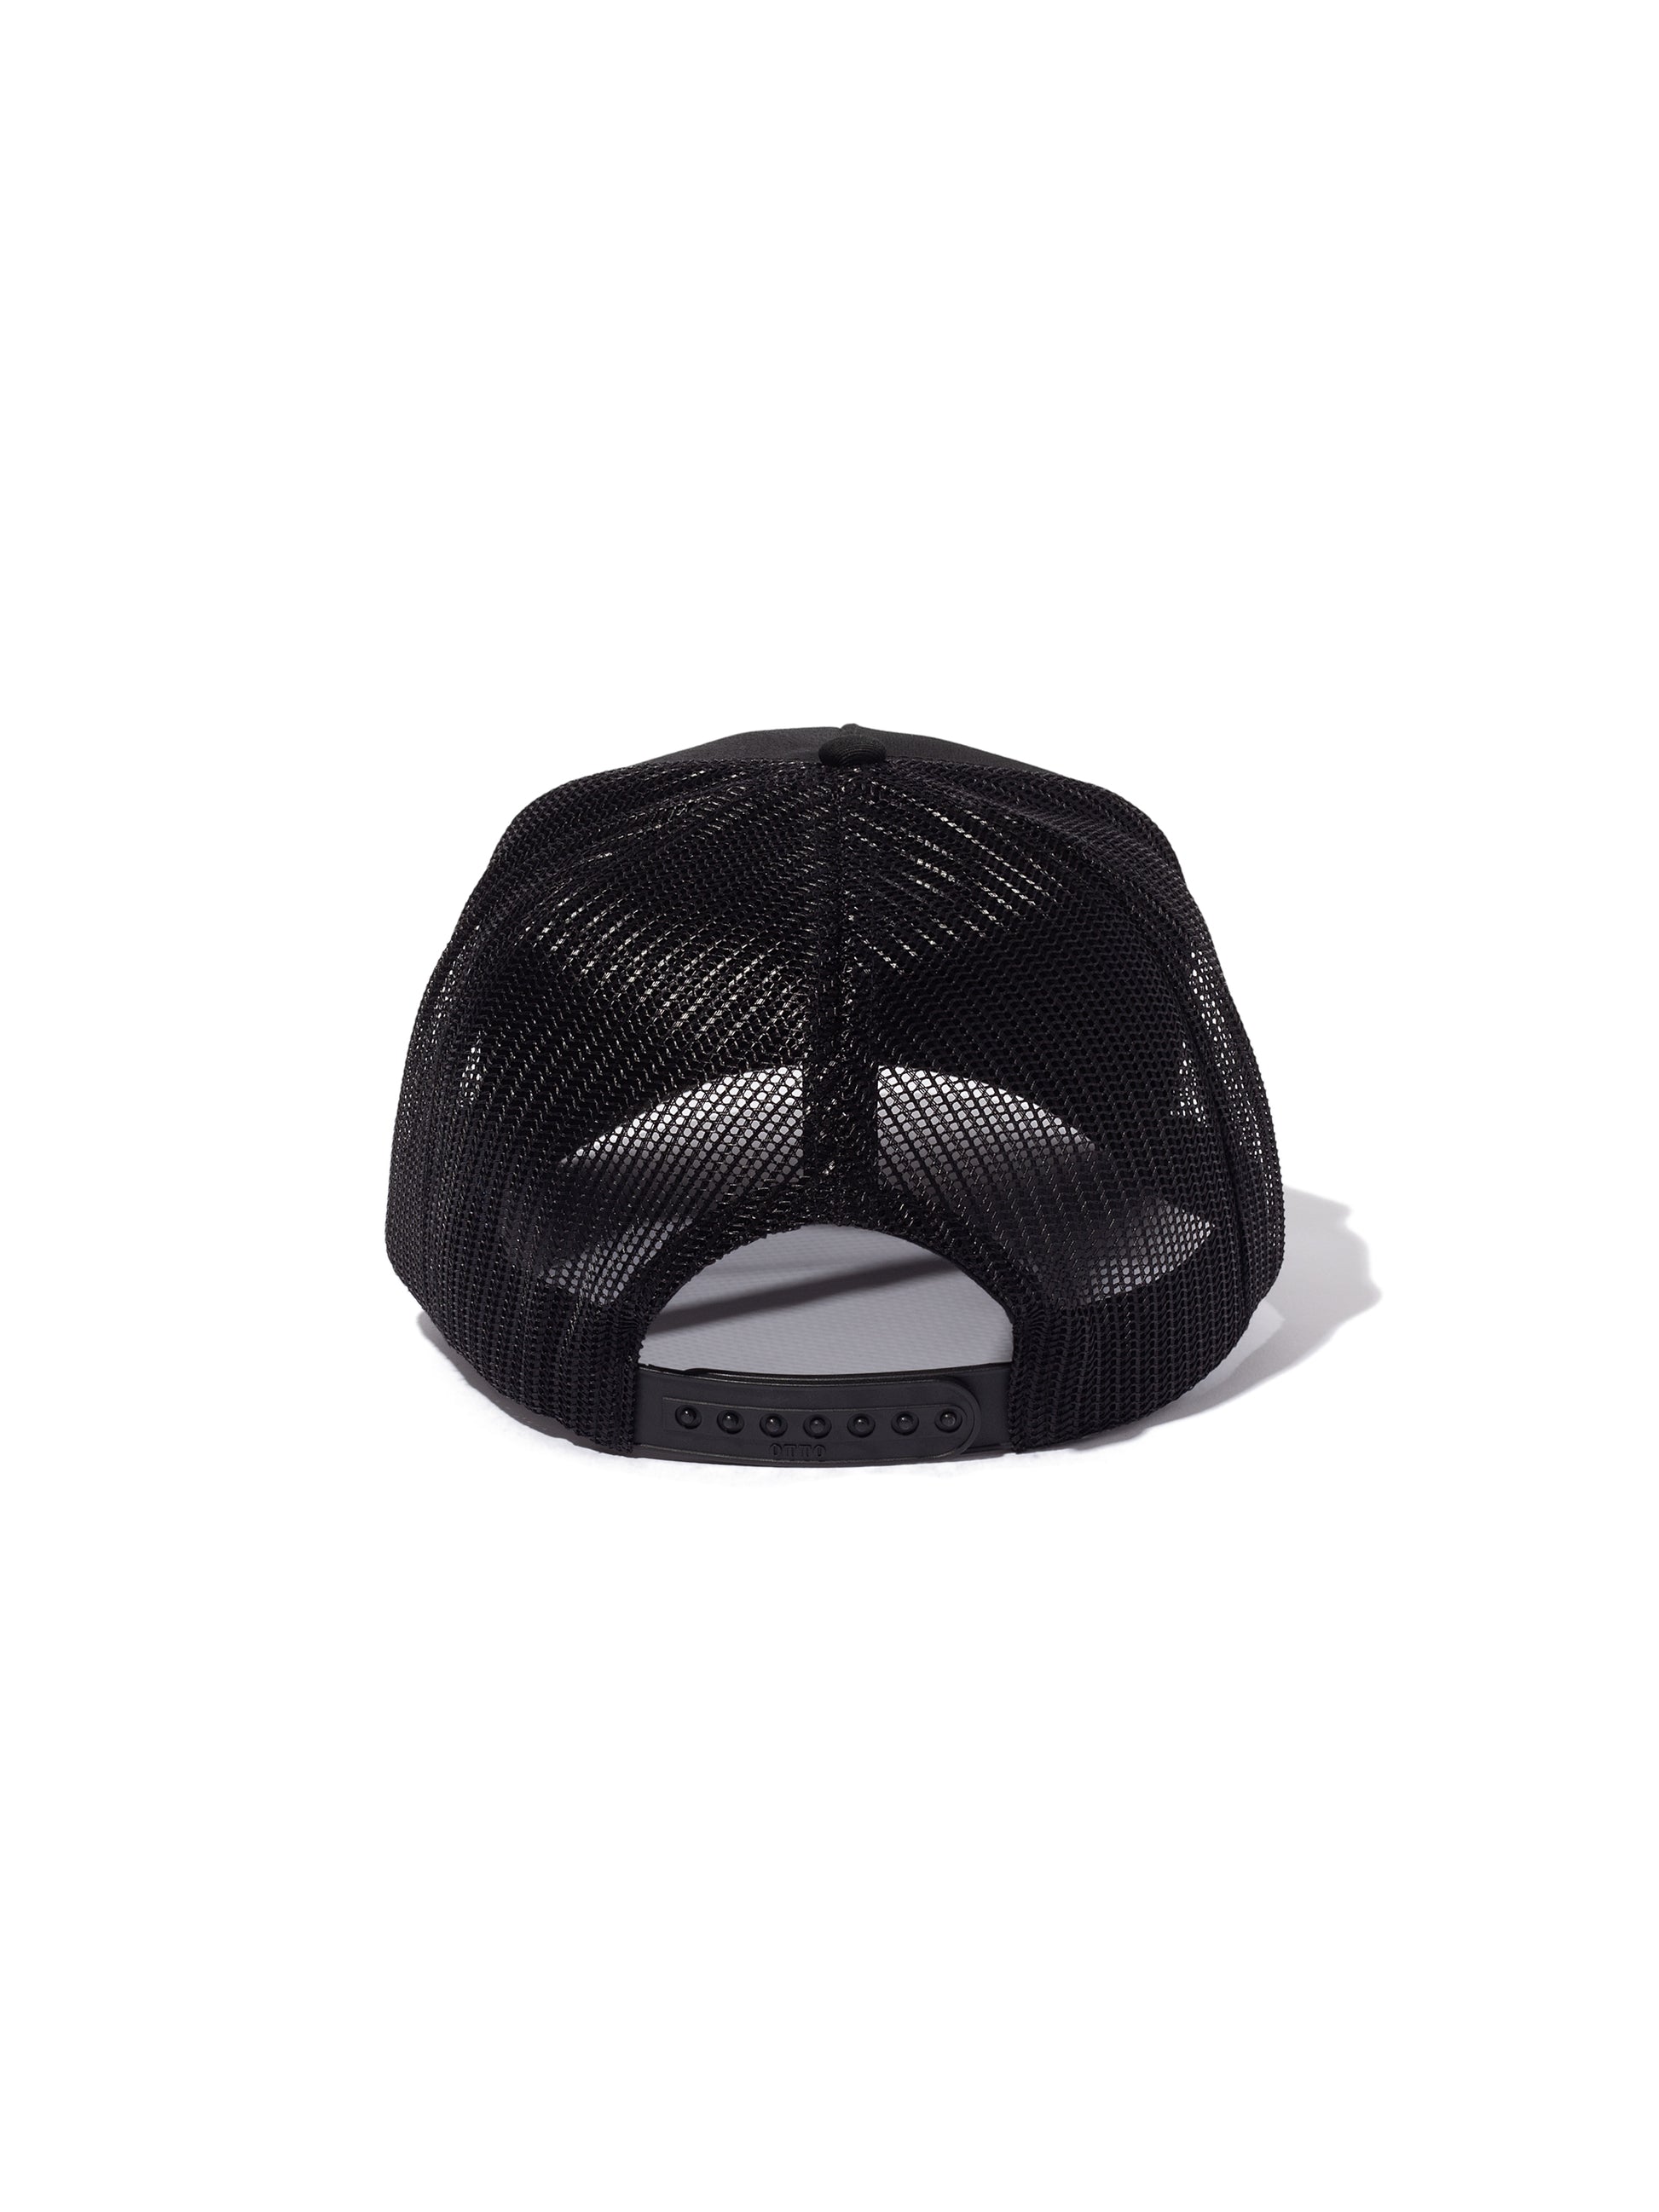 Uncommon James Hat | Black | Product Detail Image 2 | Uncommon Lifestyle